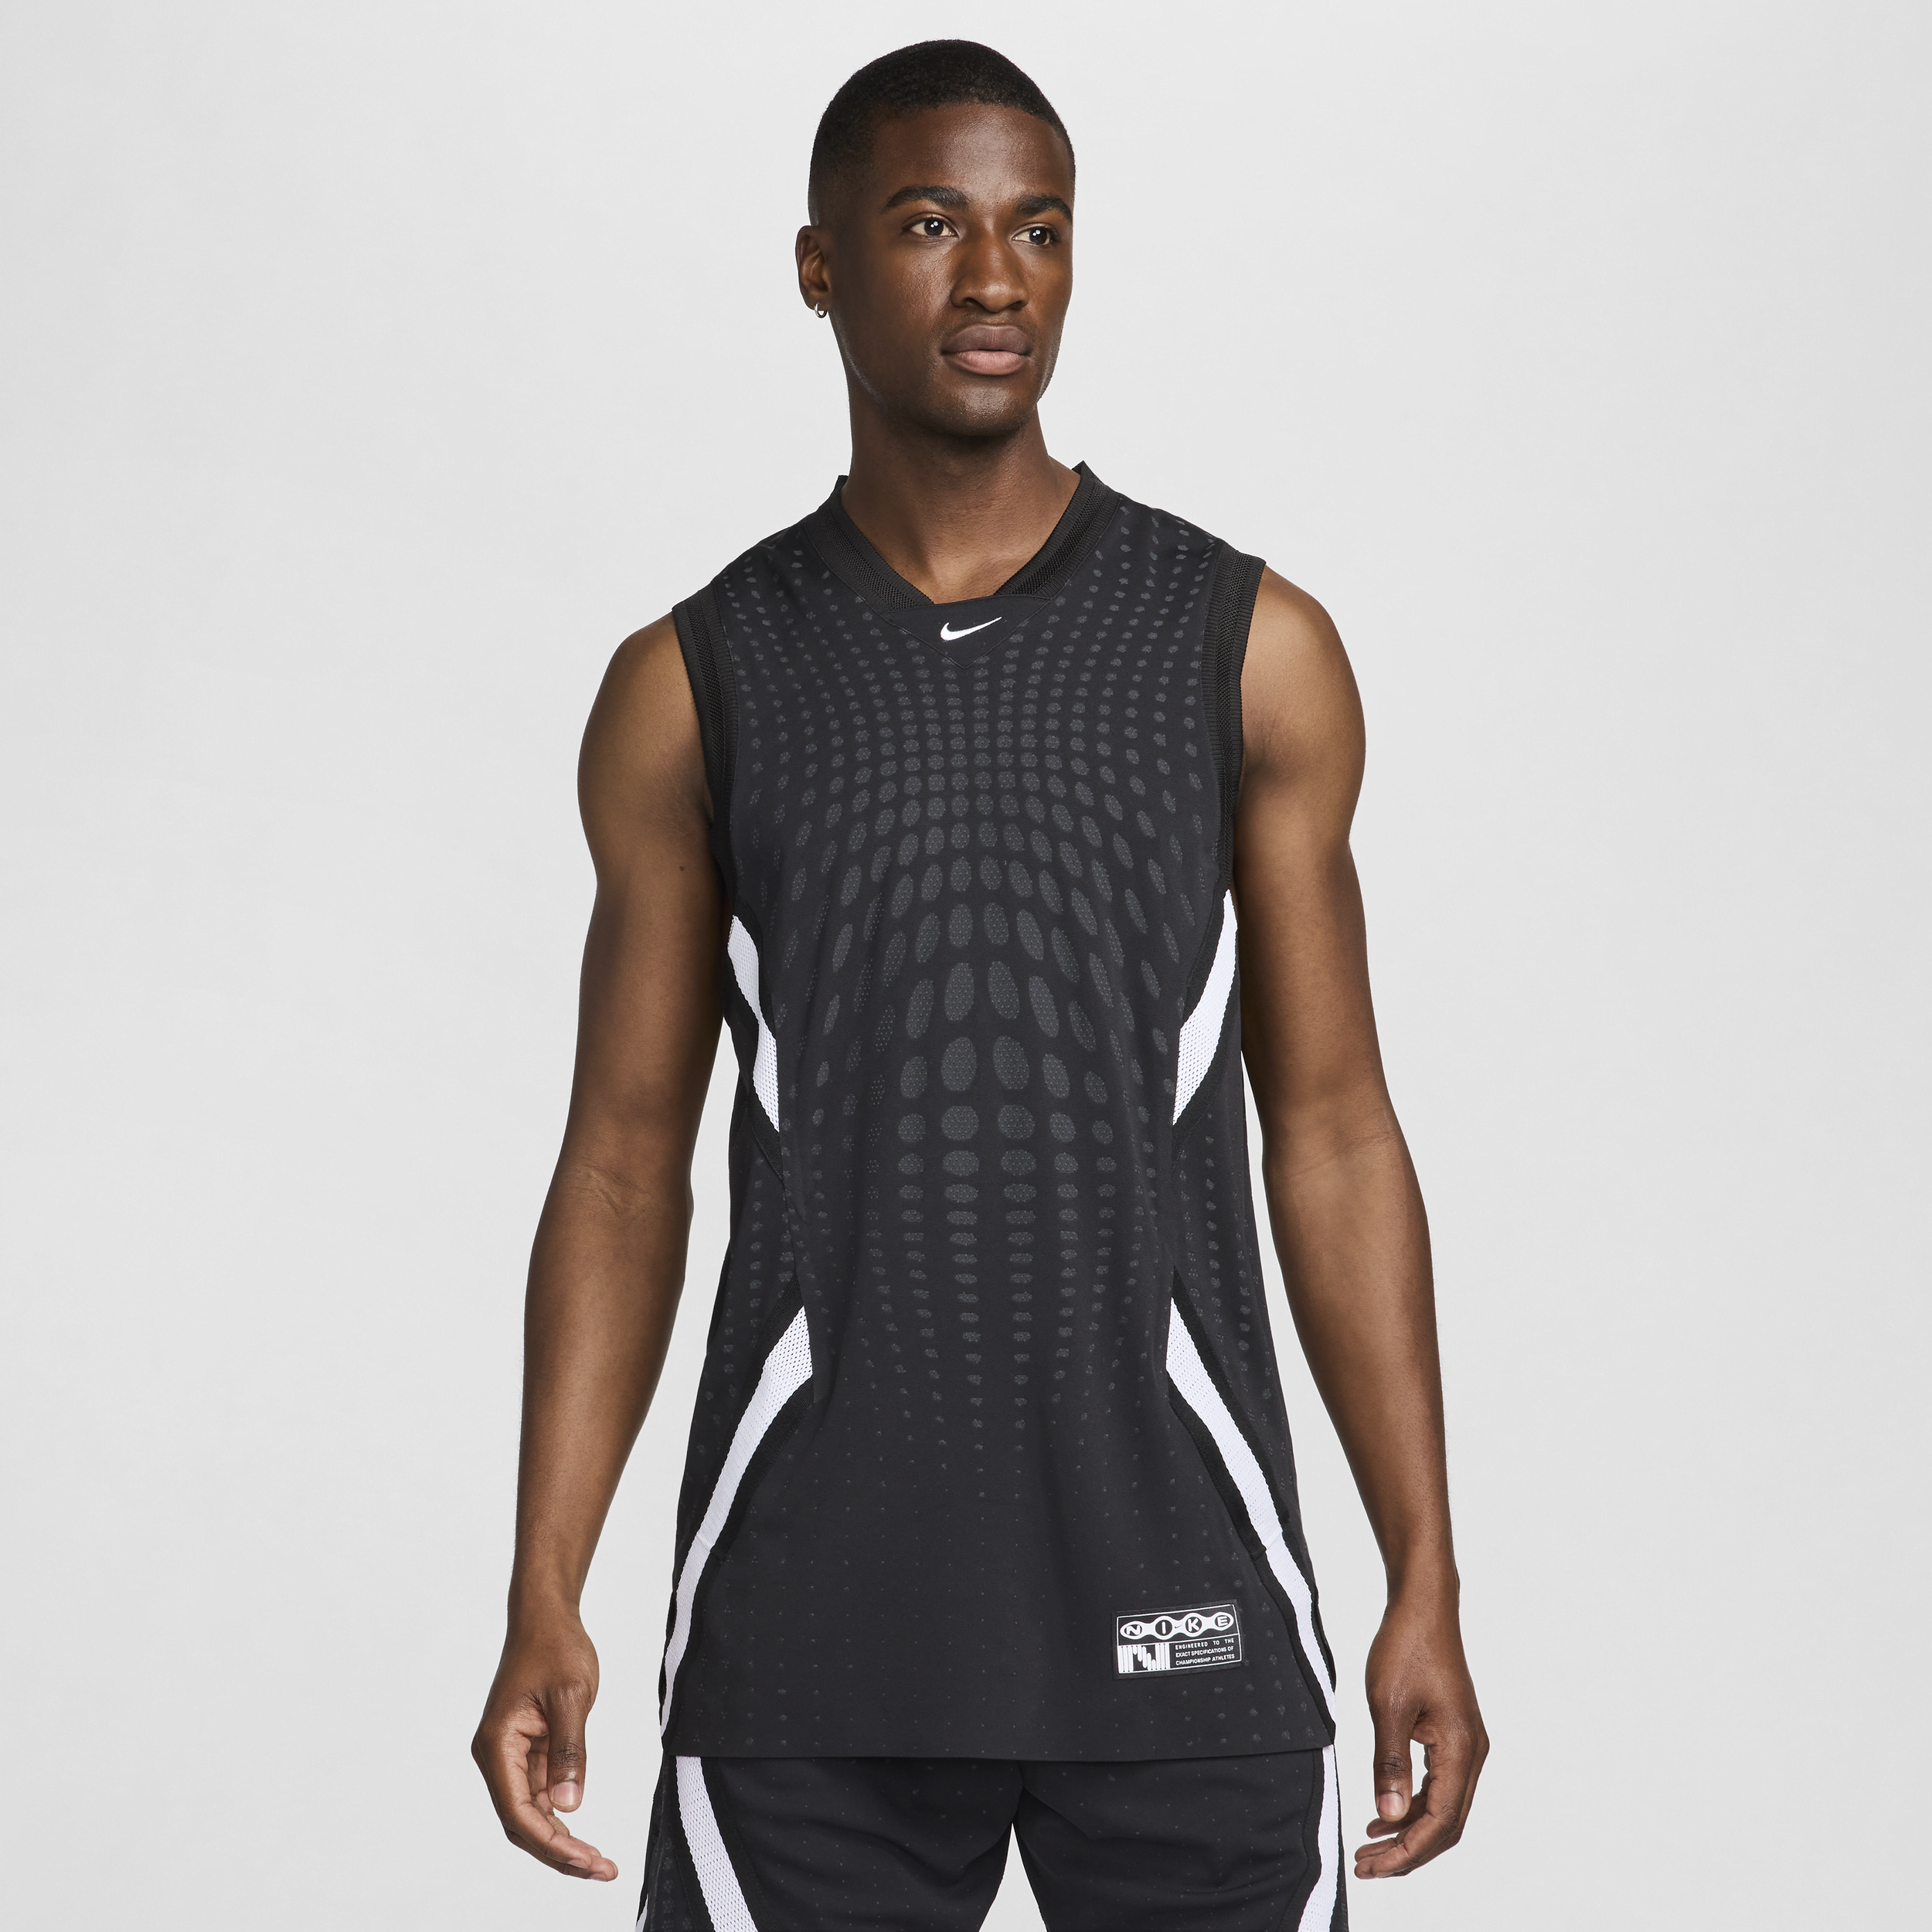 Nike Dri-FIT ADV basketbaljersey voor heren - Zwart